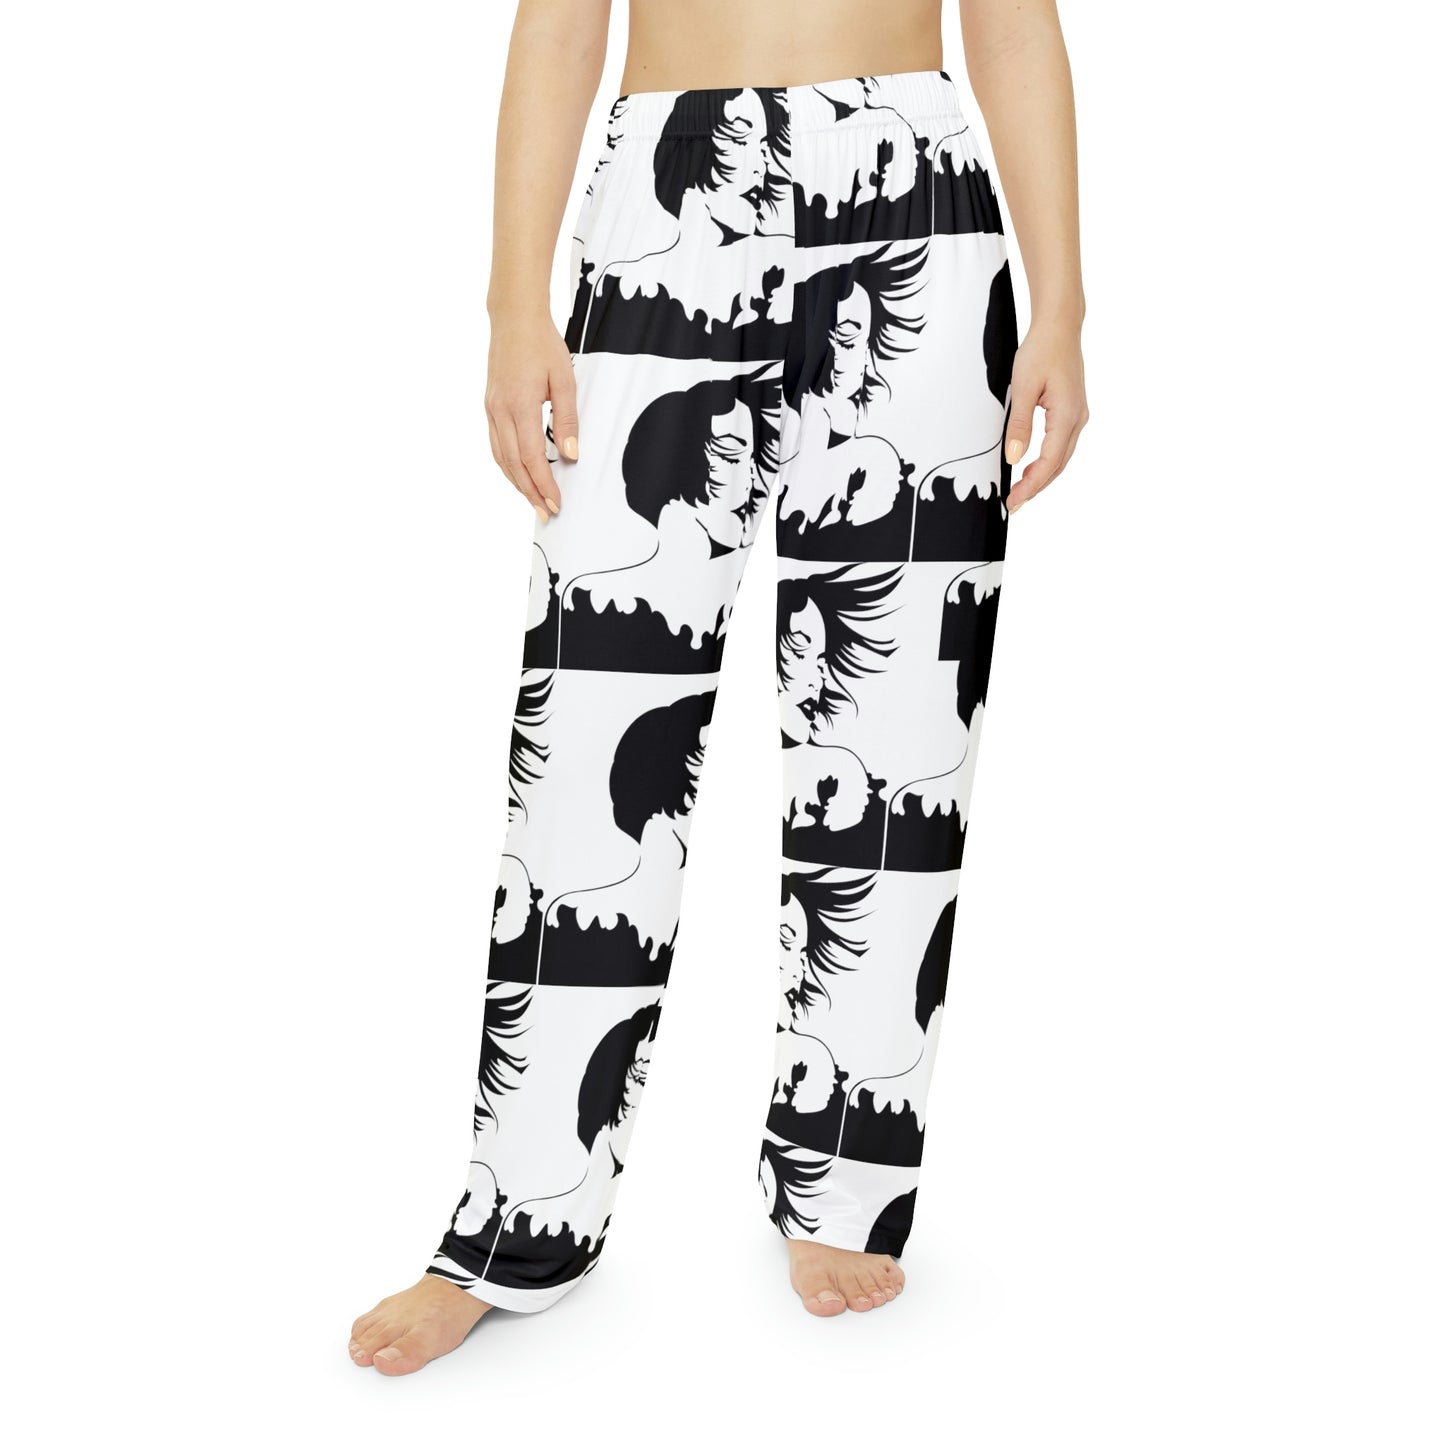 Sassy Lady Women's All Over Print Pajama Pants